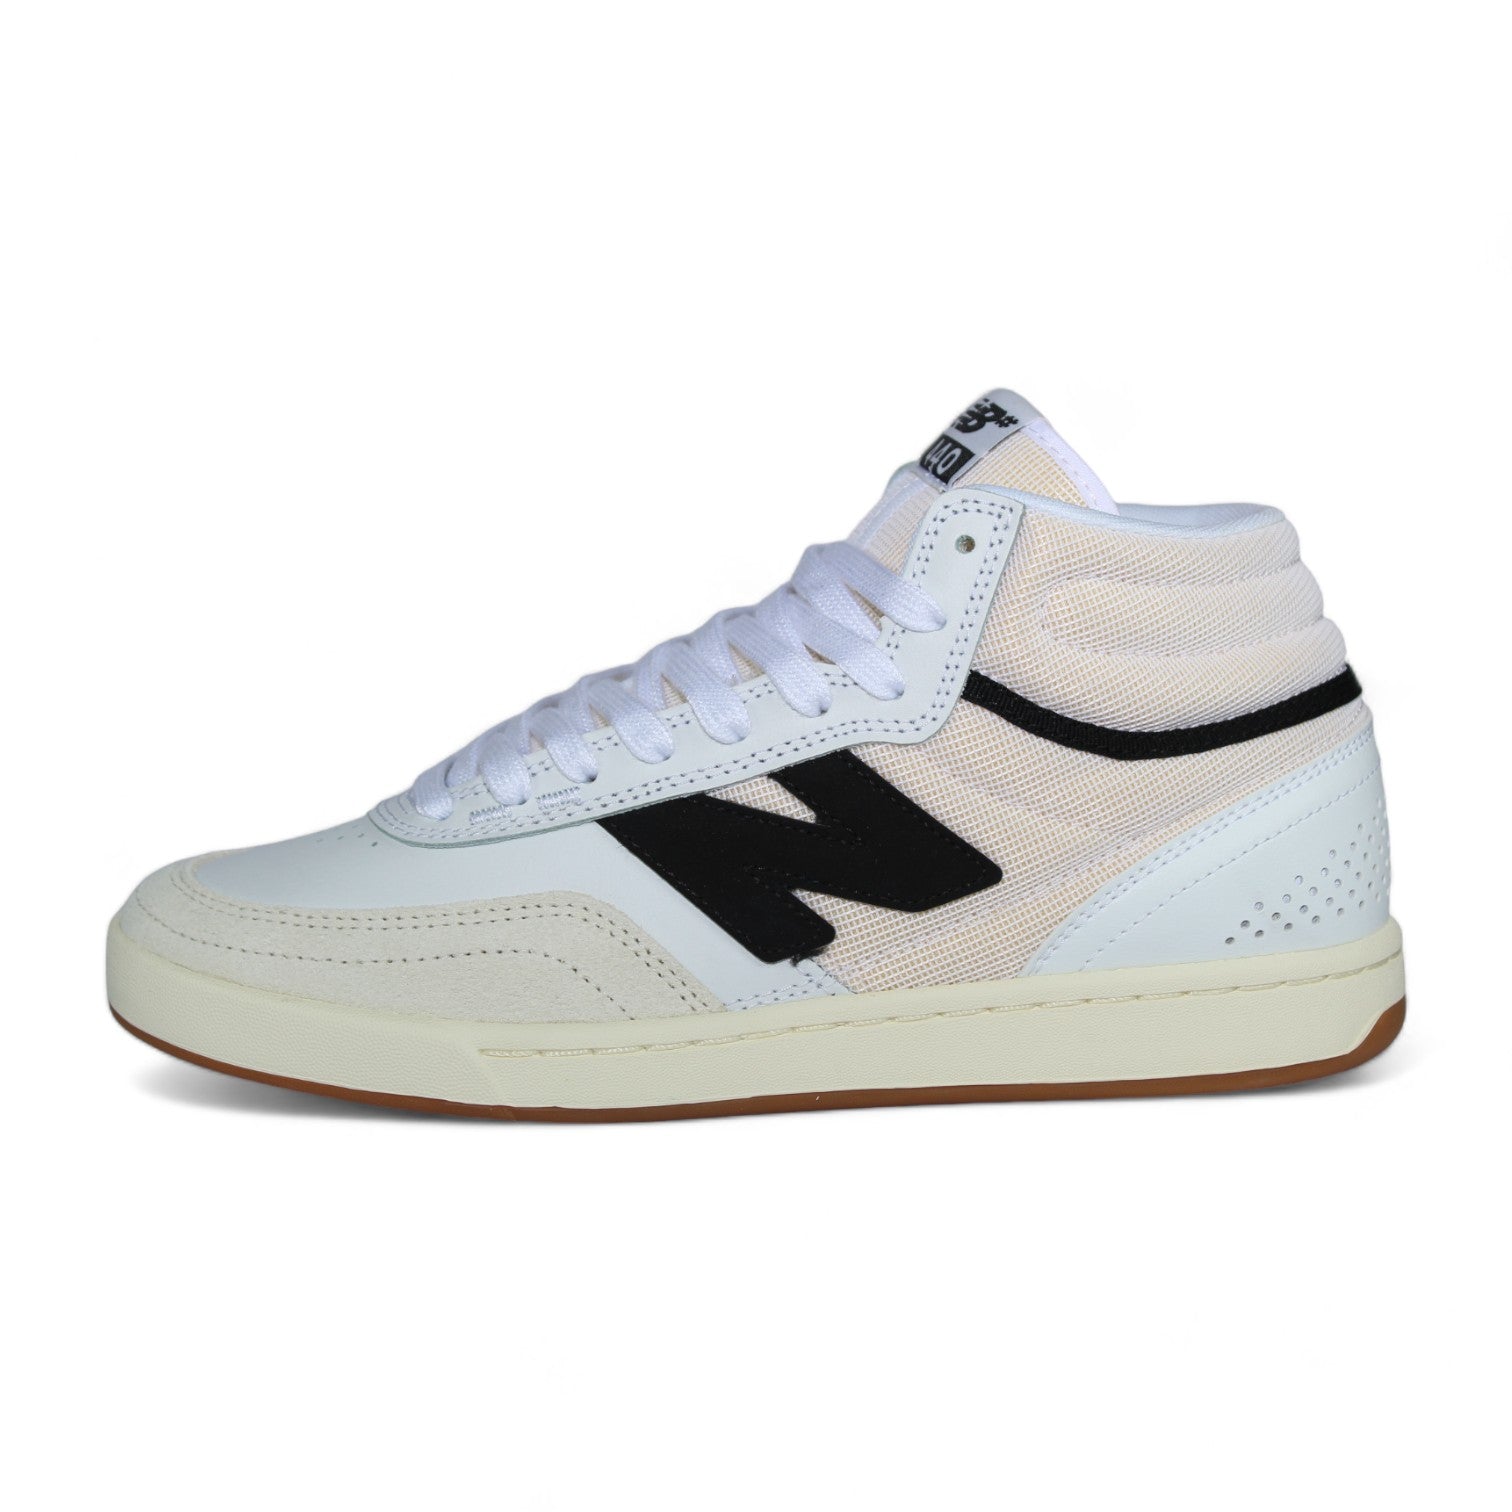 New Balance Numeric NM440v2 High Shoes  - White/Black